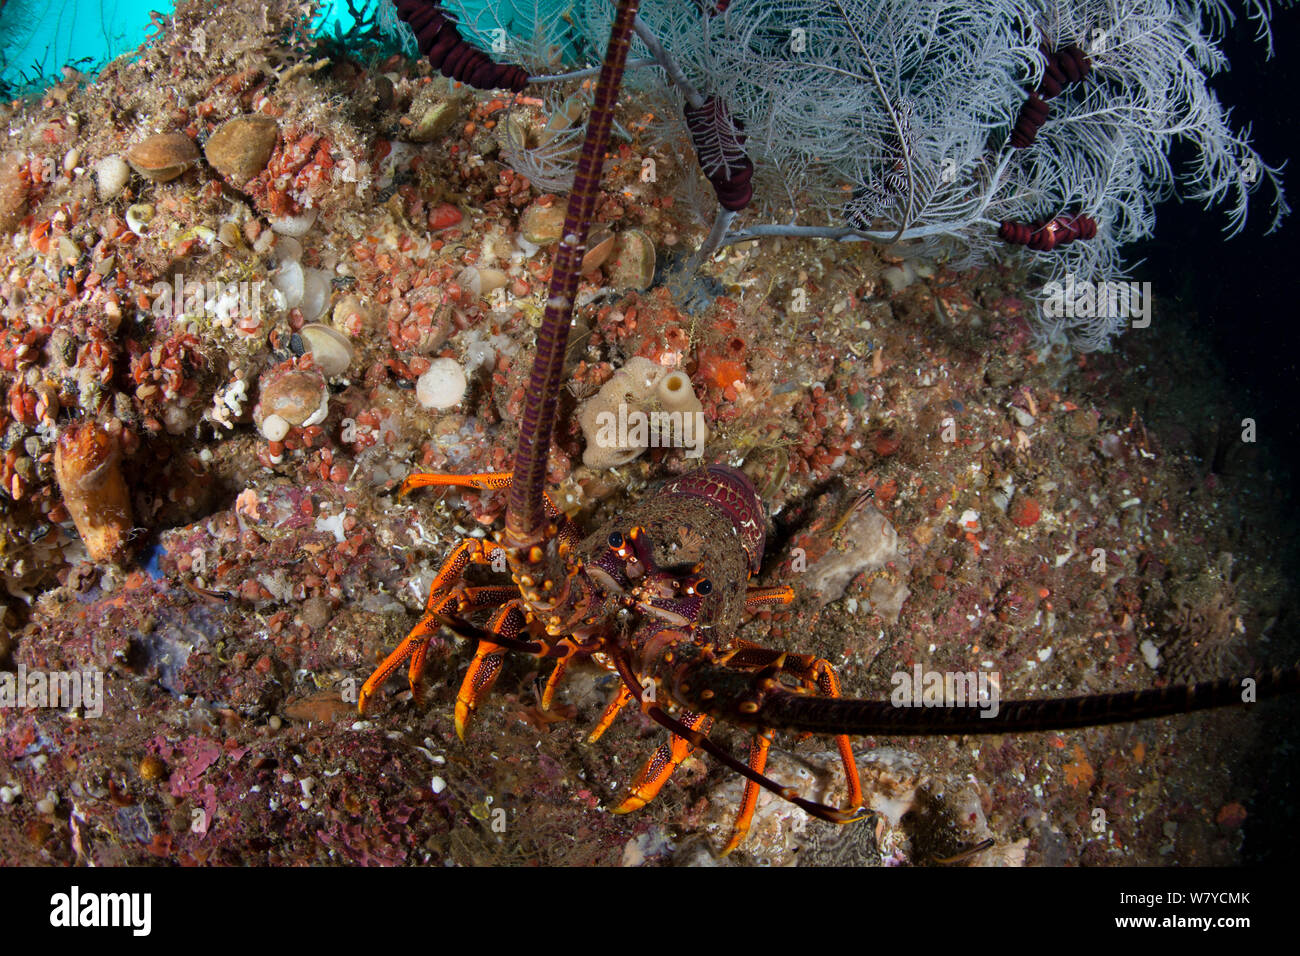 New Zealand Crayfish or Southern Rock Lobster (Jasus edwardsii) hides under a Fiordland Black Coral tree (Antipathella fiordensis) in Dusky Sound, Fiordland National Park, New Zealand. April 2014. Stock Photo